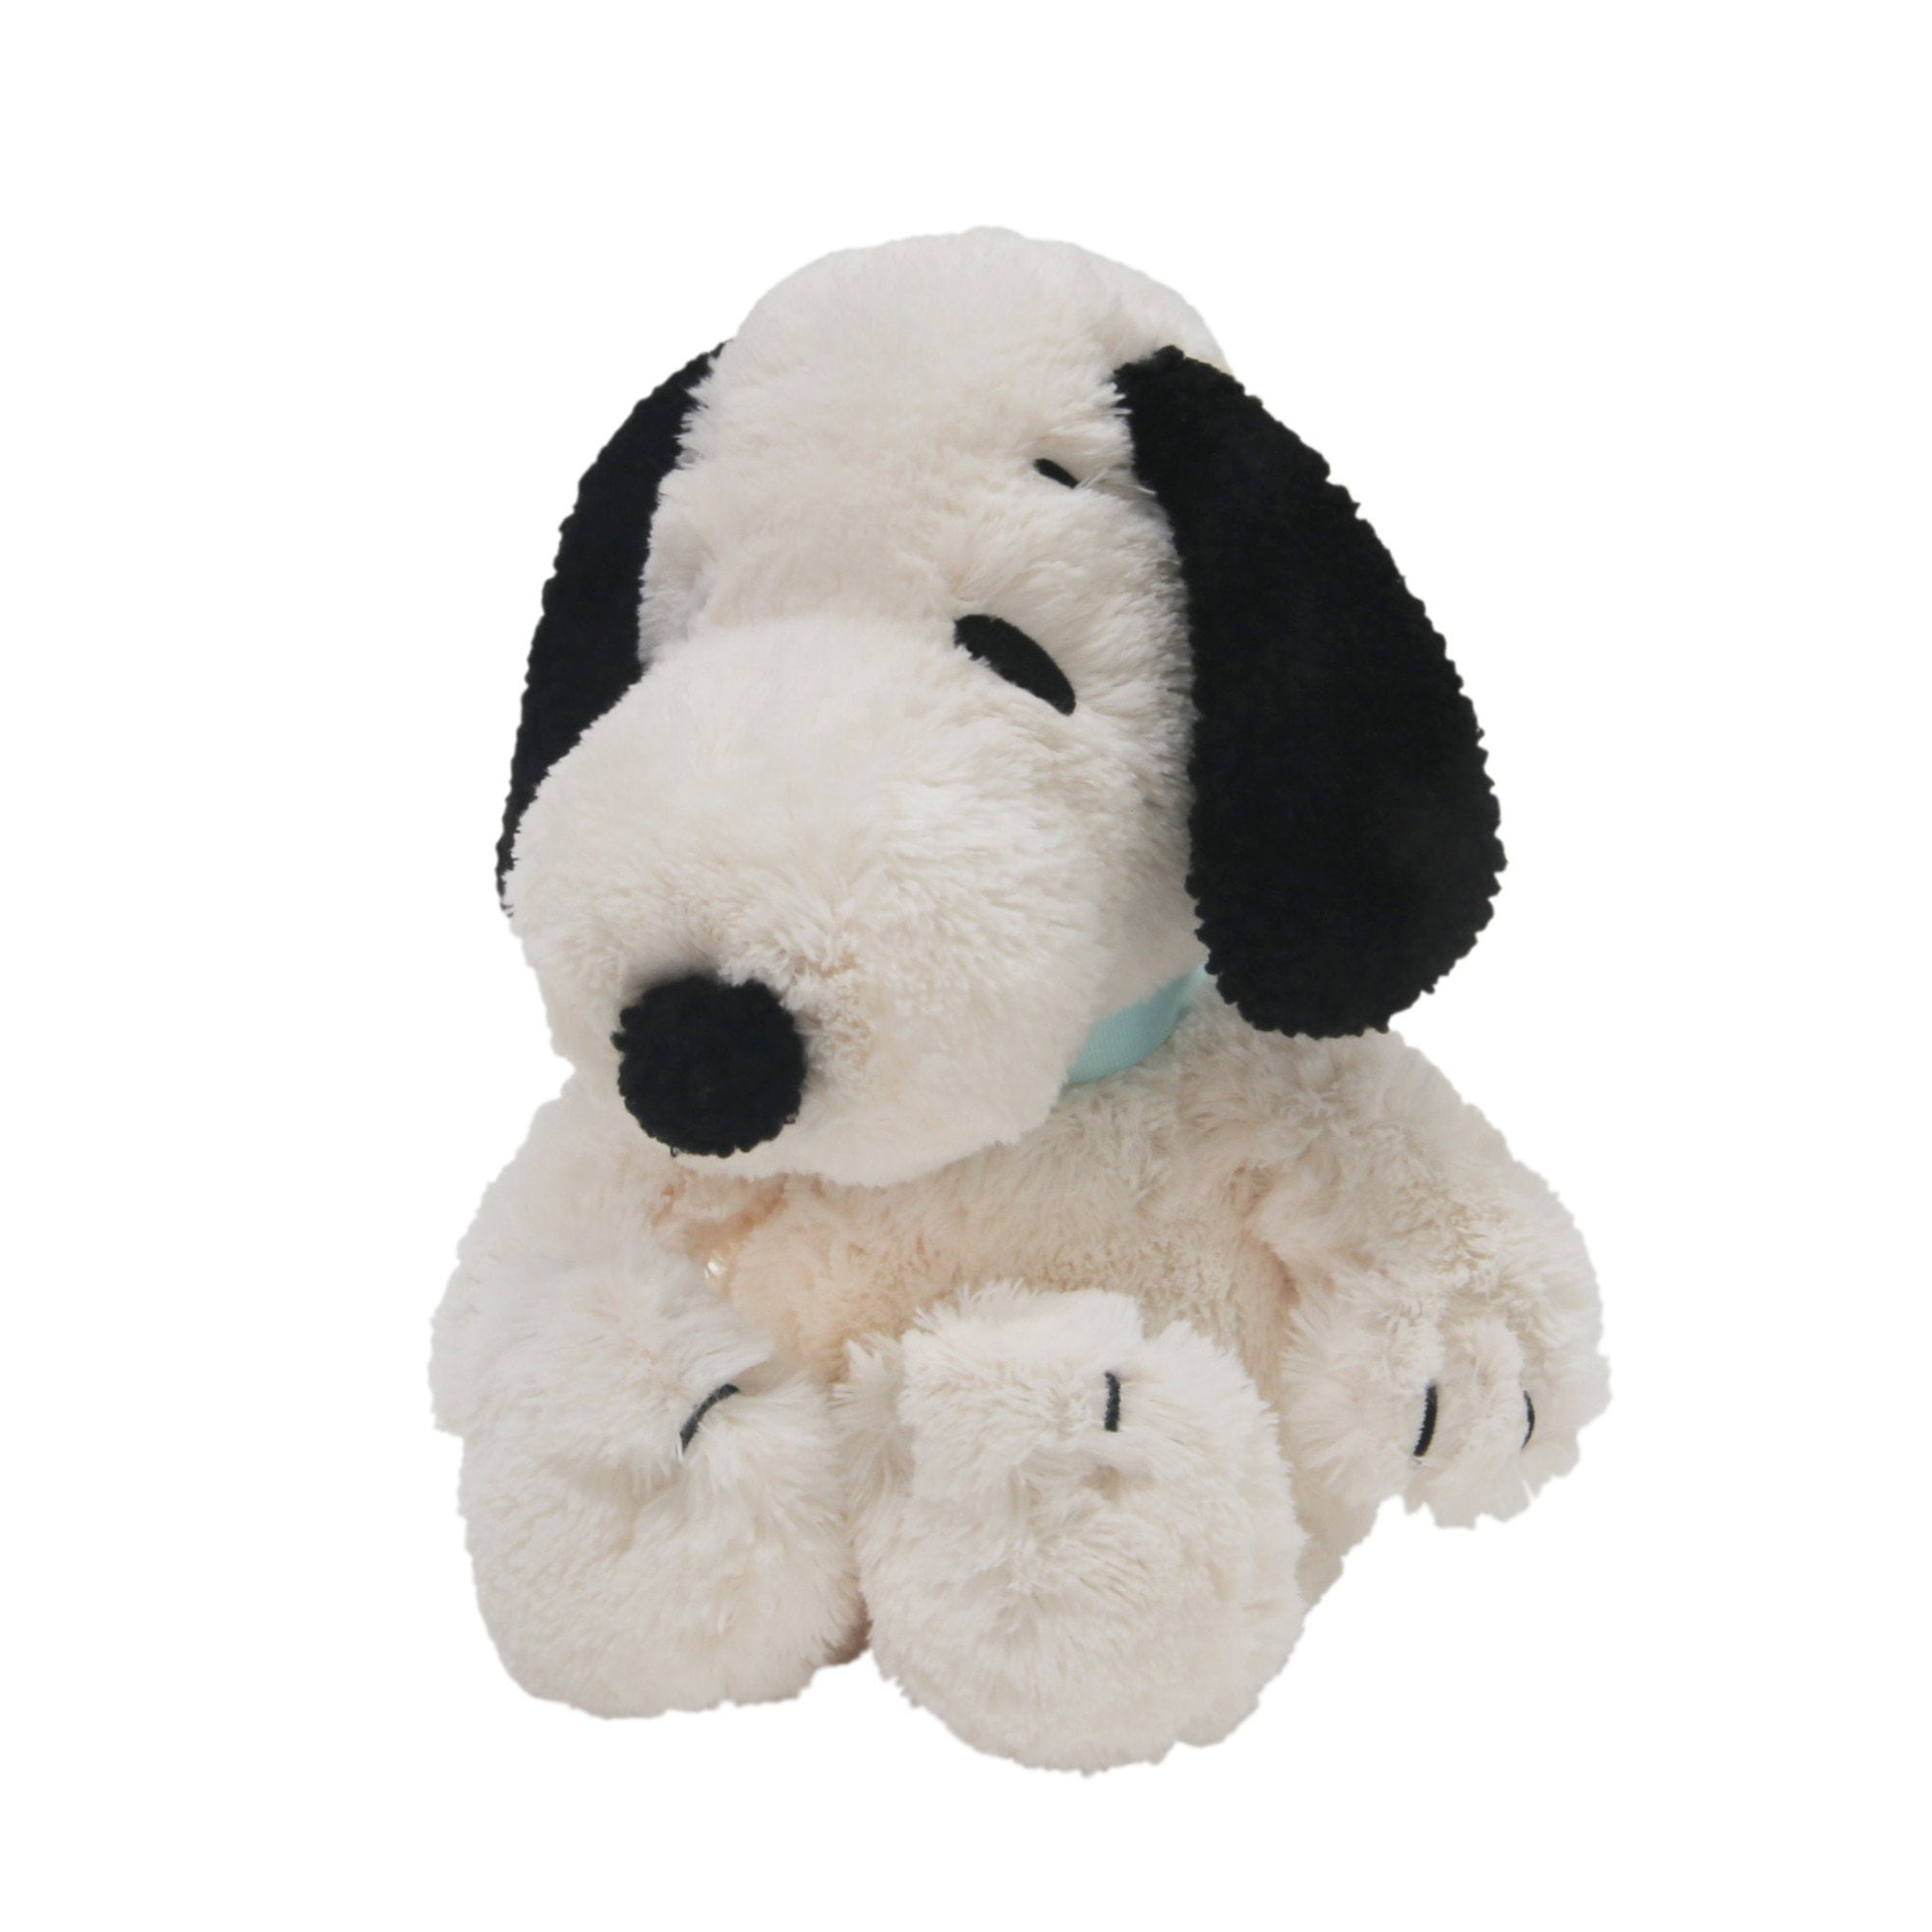 stuffed snoopy dog